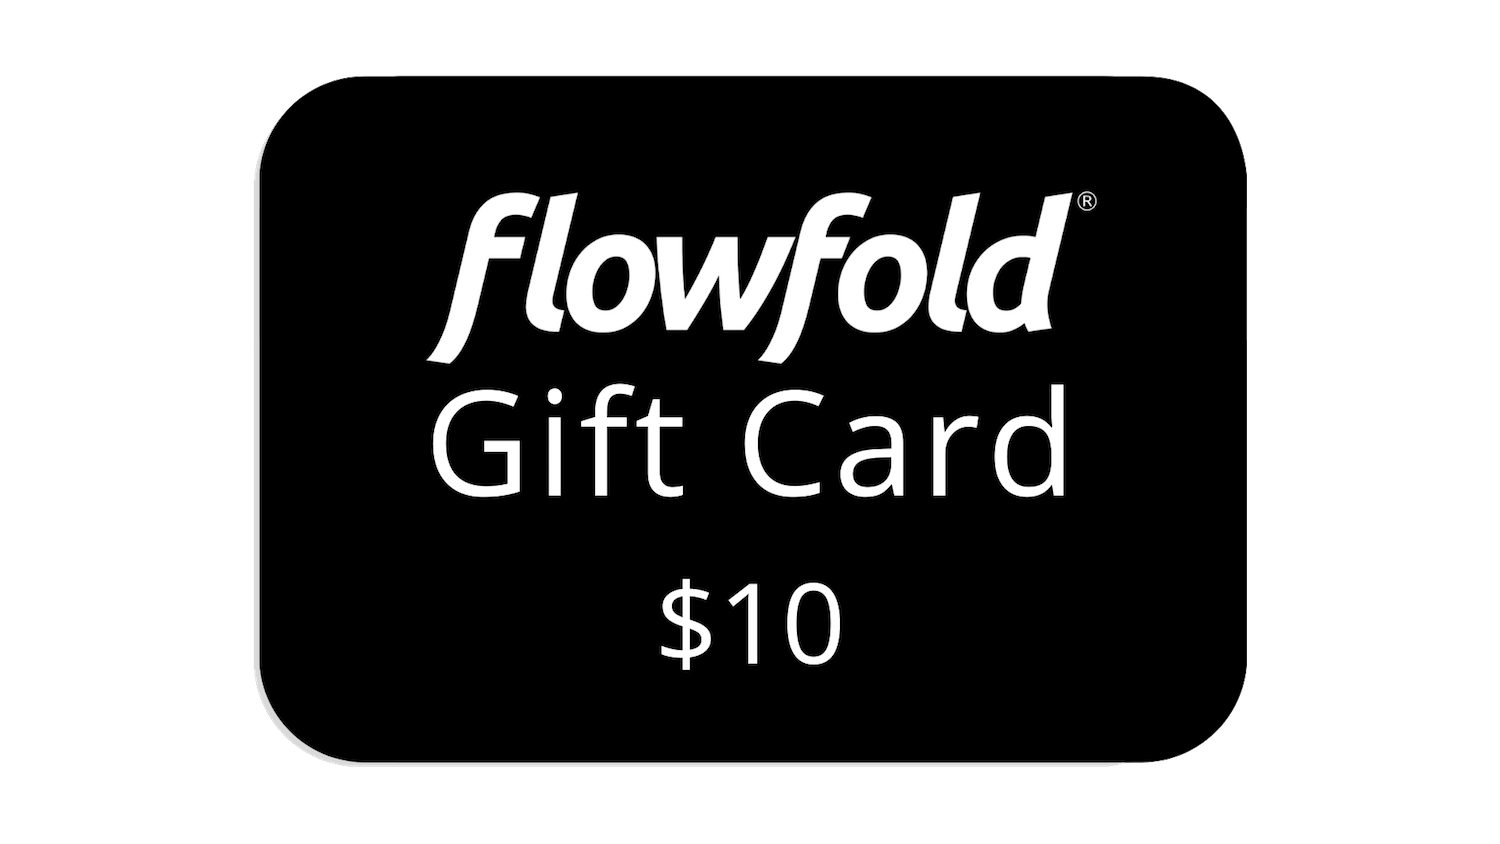 Flowfold Gift Card - $10